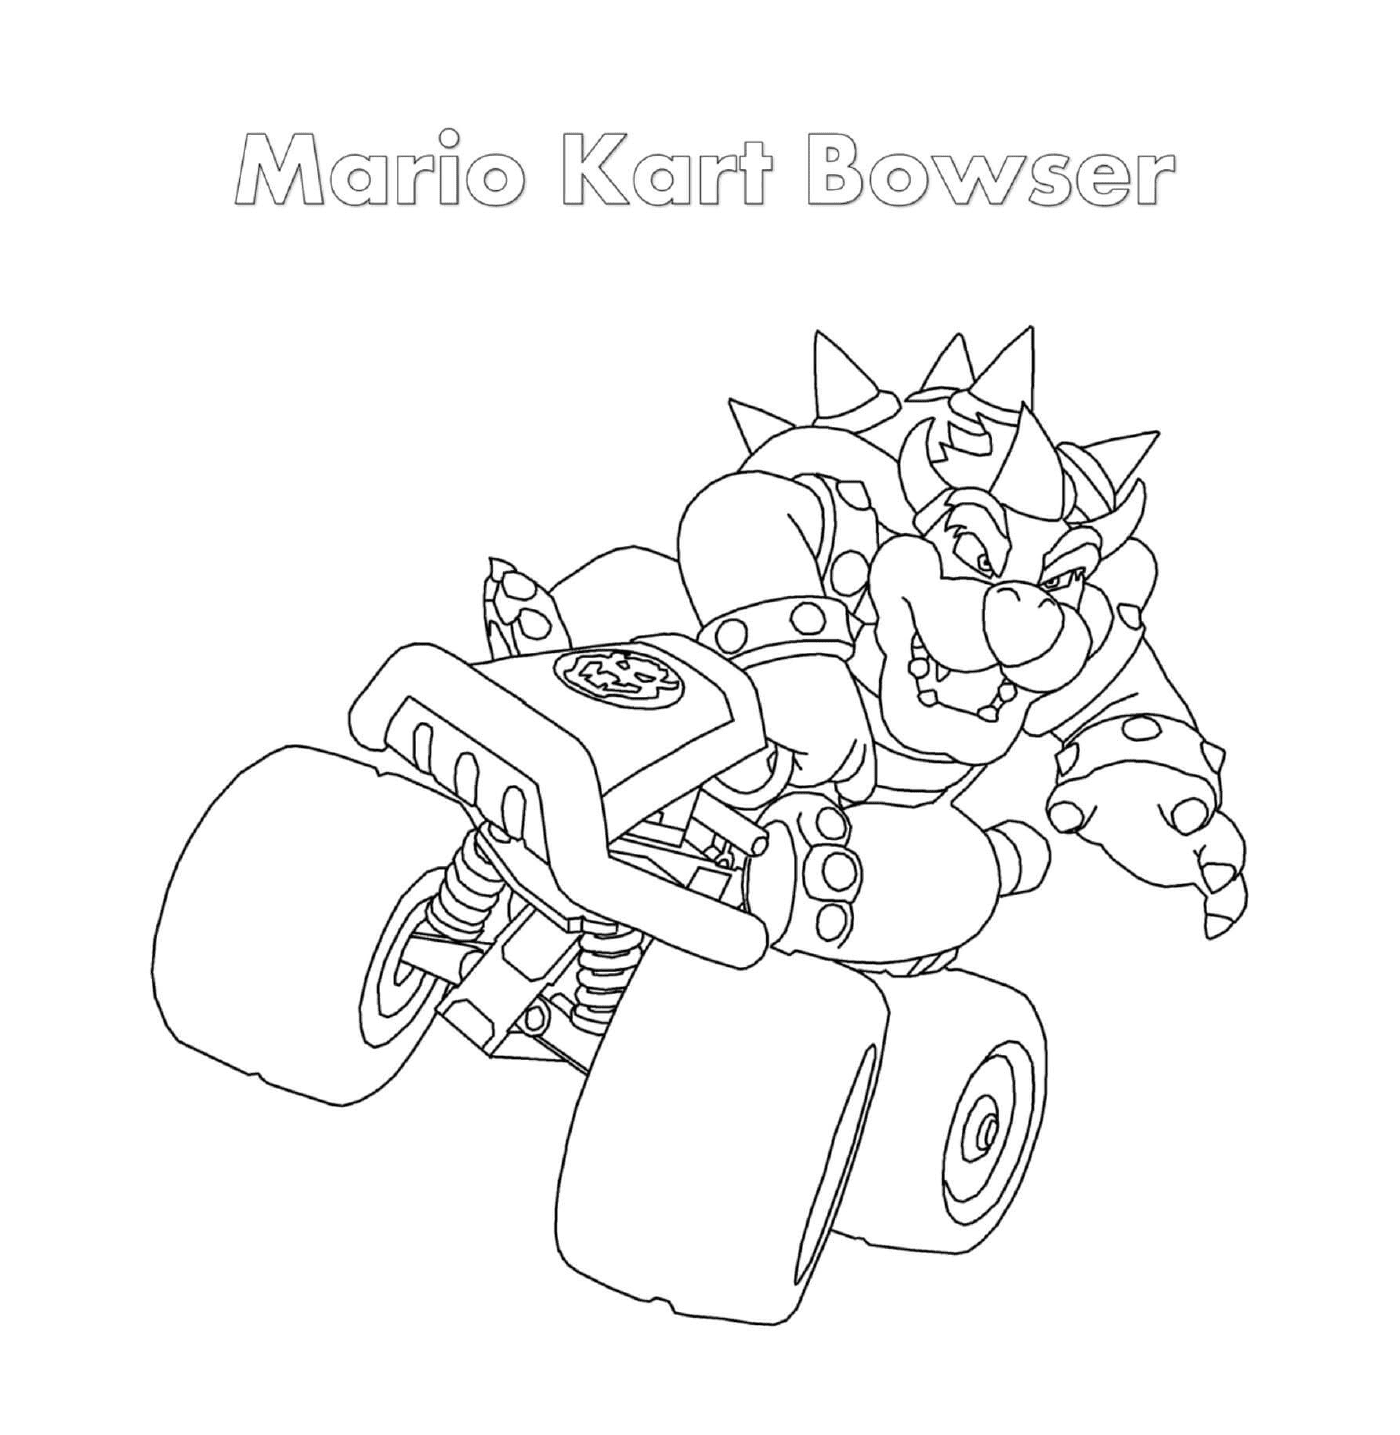  Bowser en Mario Kart 